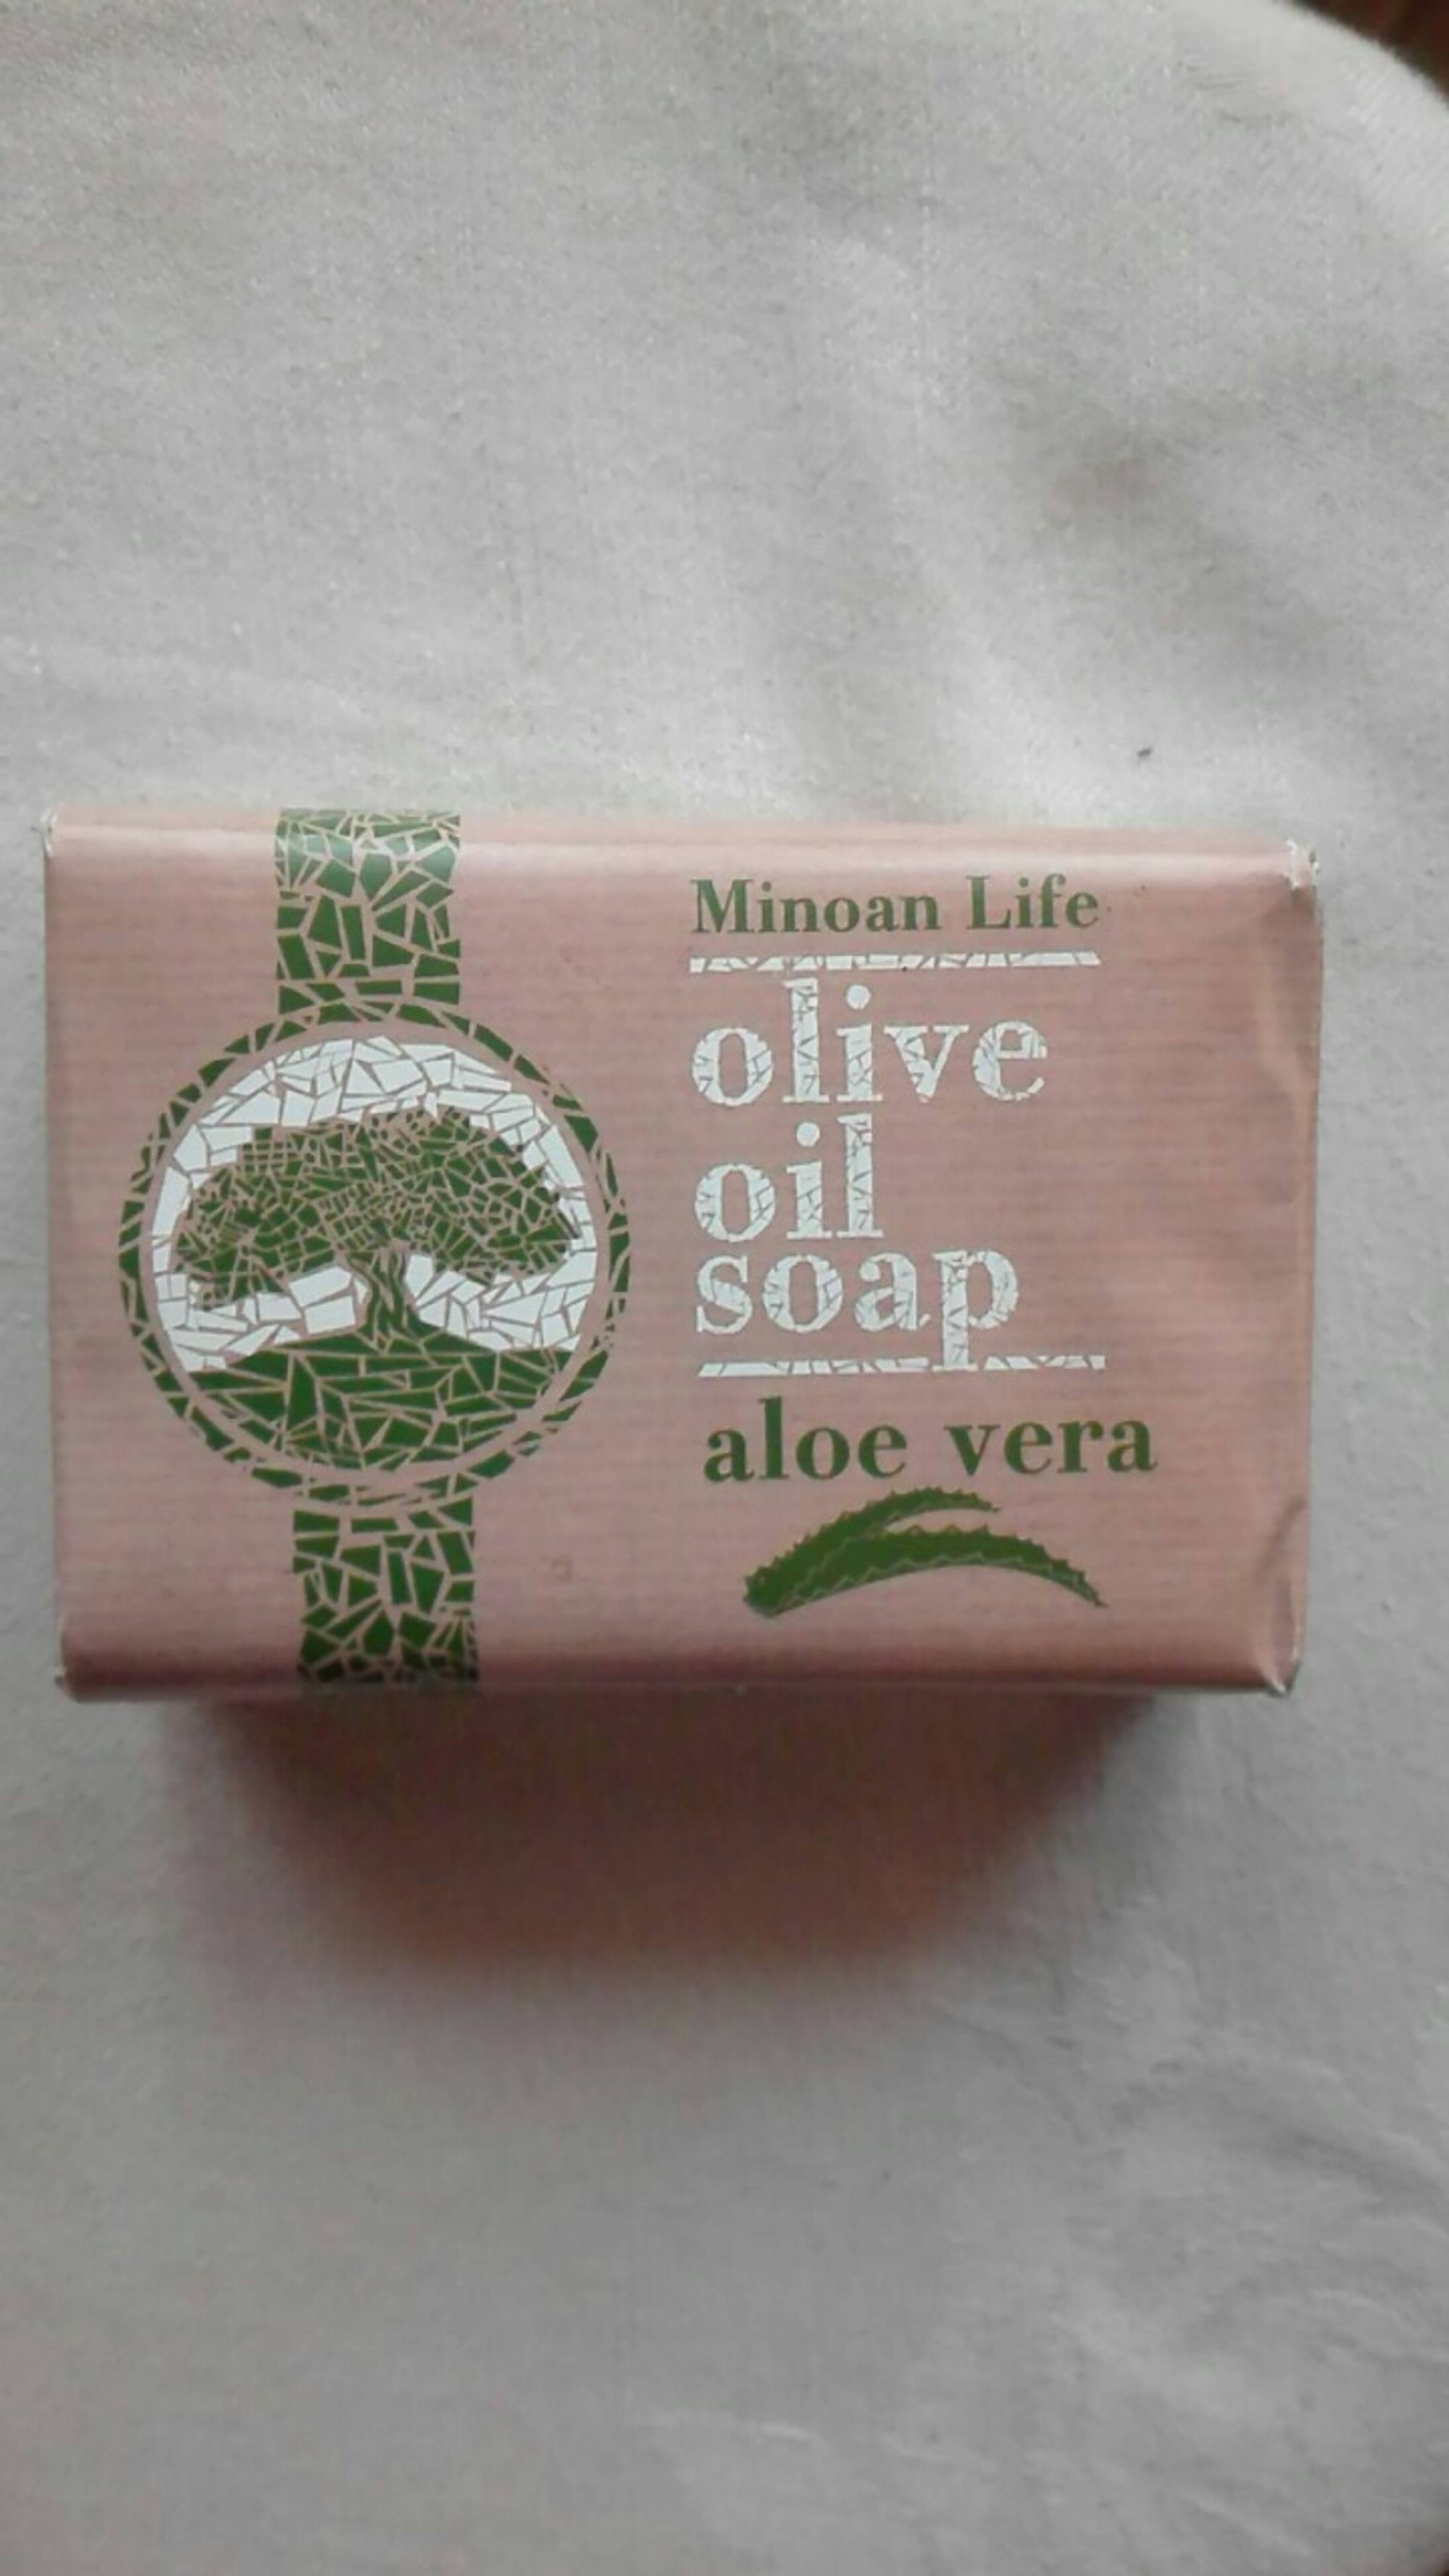 MINOAN LIFE - Olive oil soap - Aloe vera